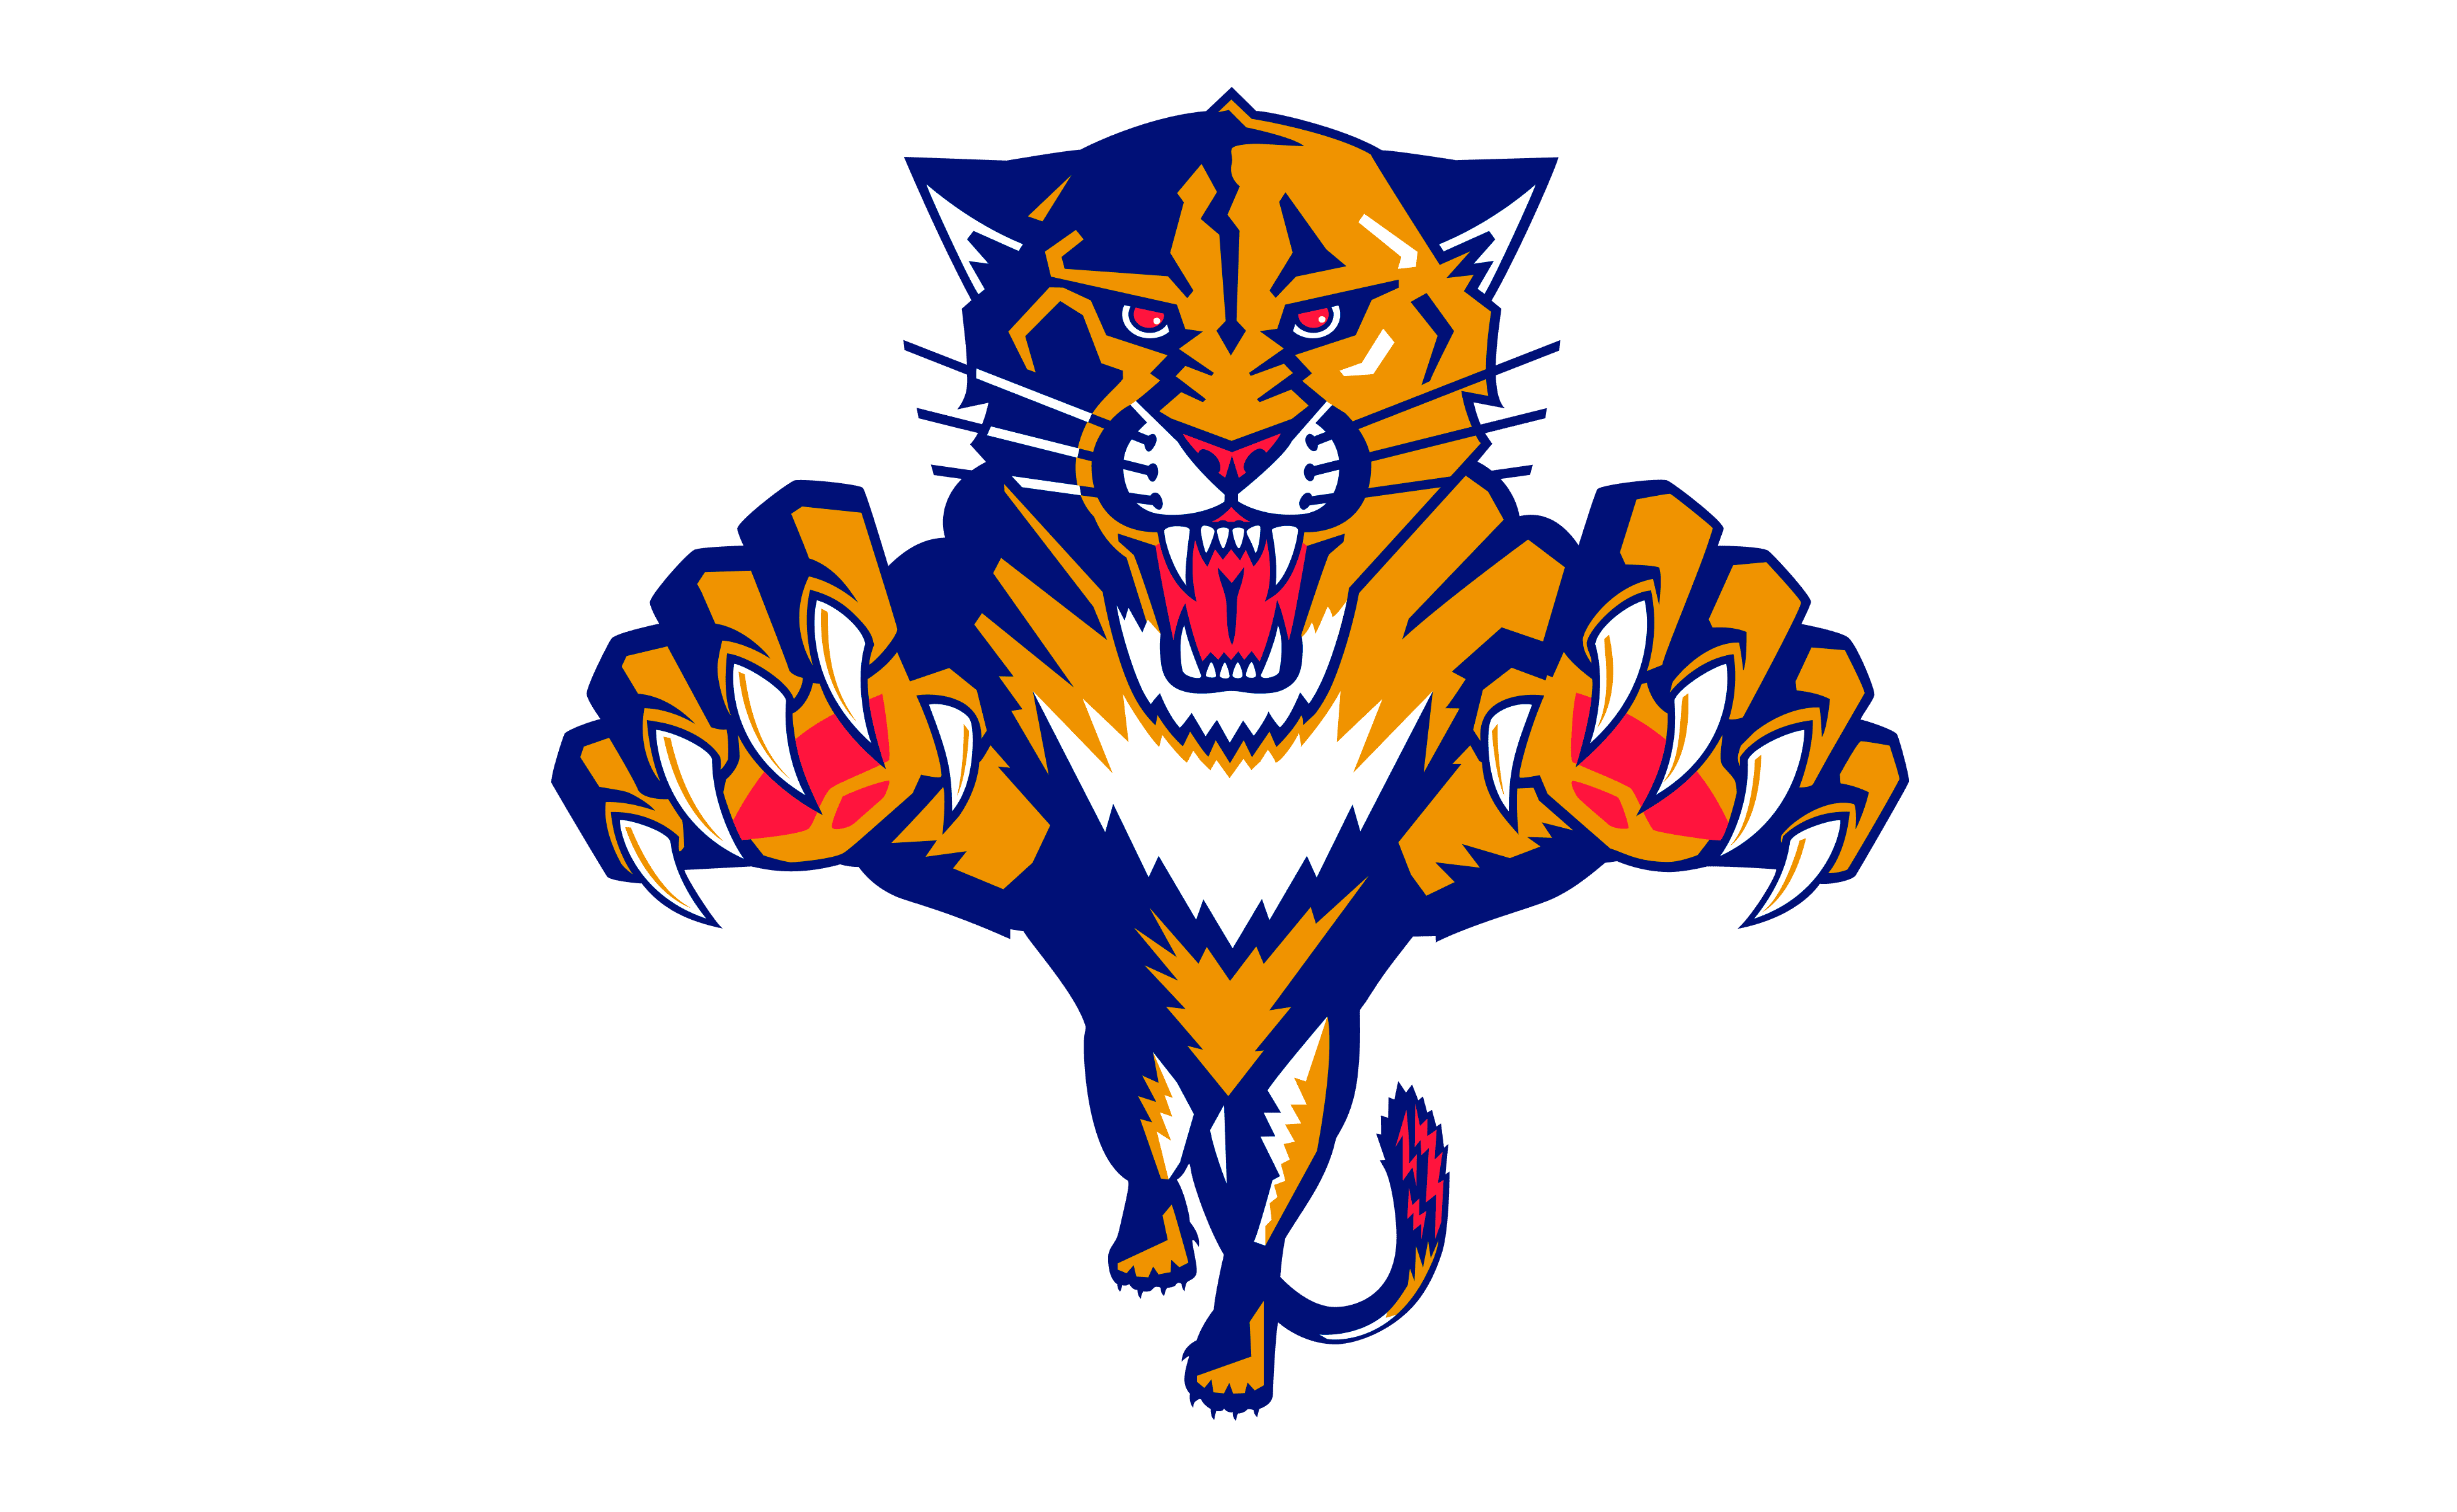 Florida Panthers added a new photo. - Florida Panthers